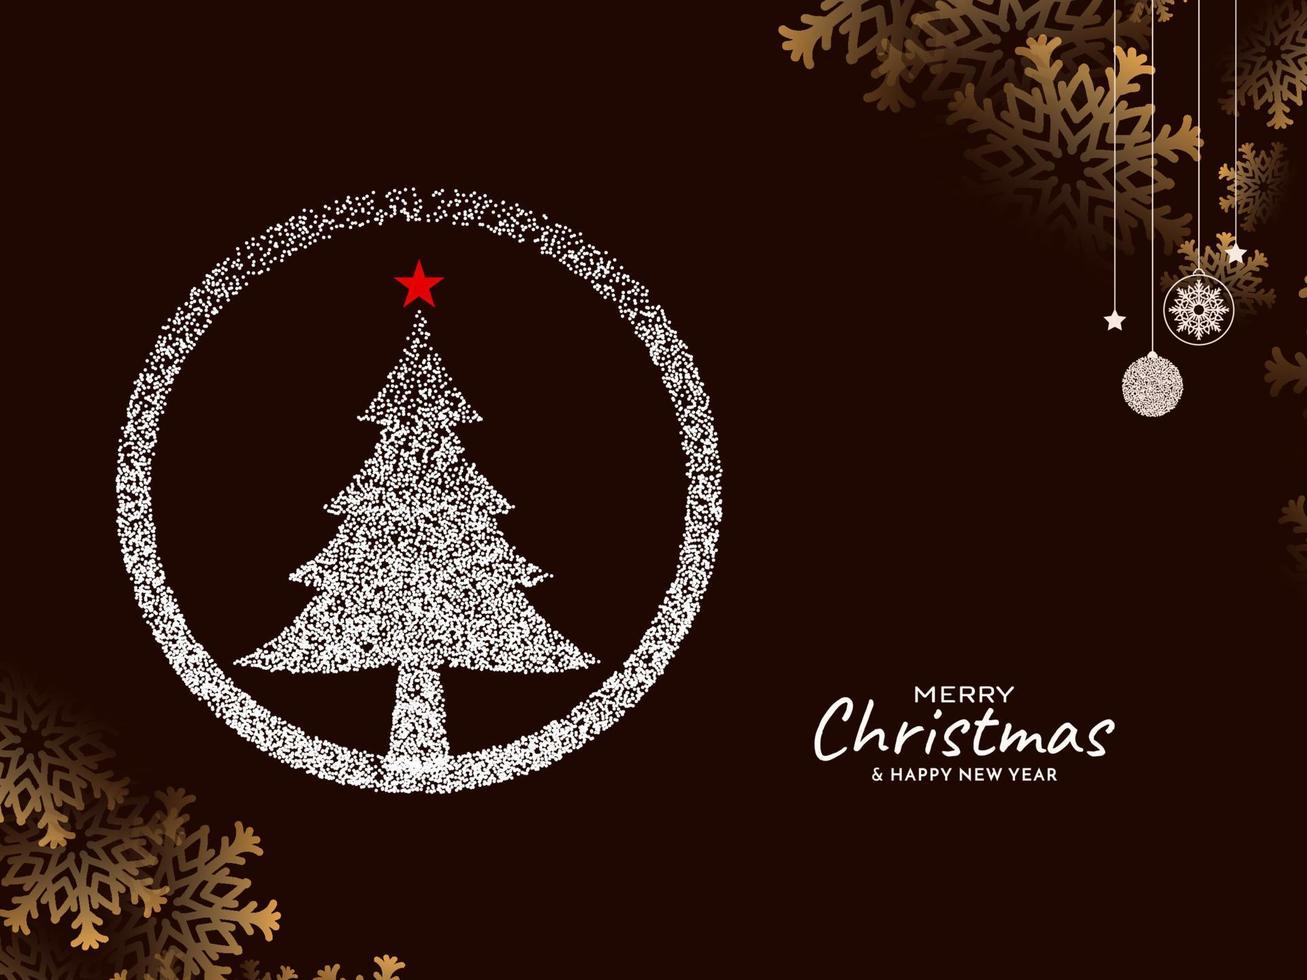 vrolijk Kerstmis festival elegant groet kaart achtergrond ontwerp vector